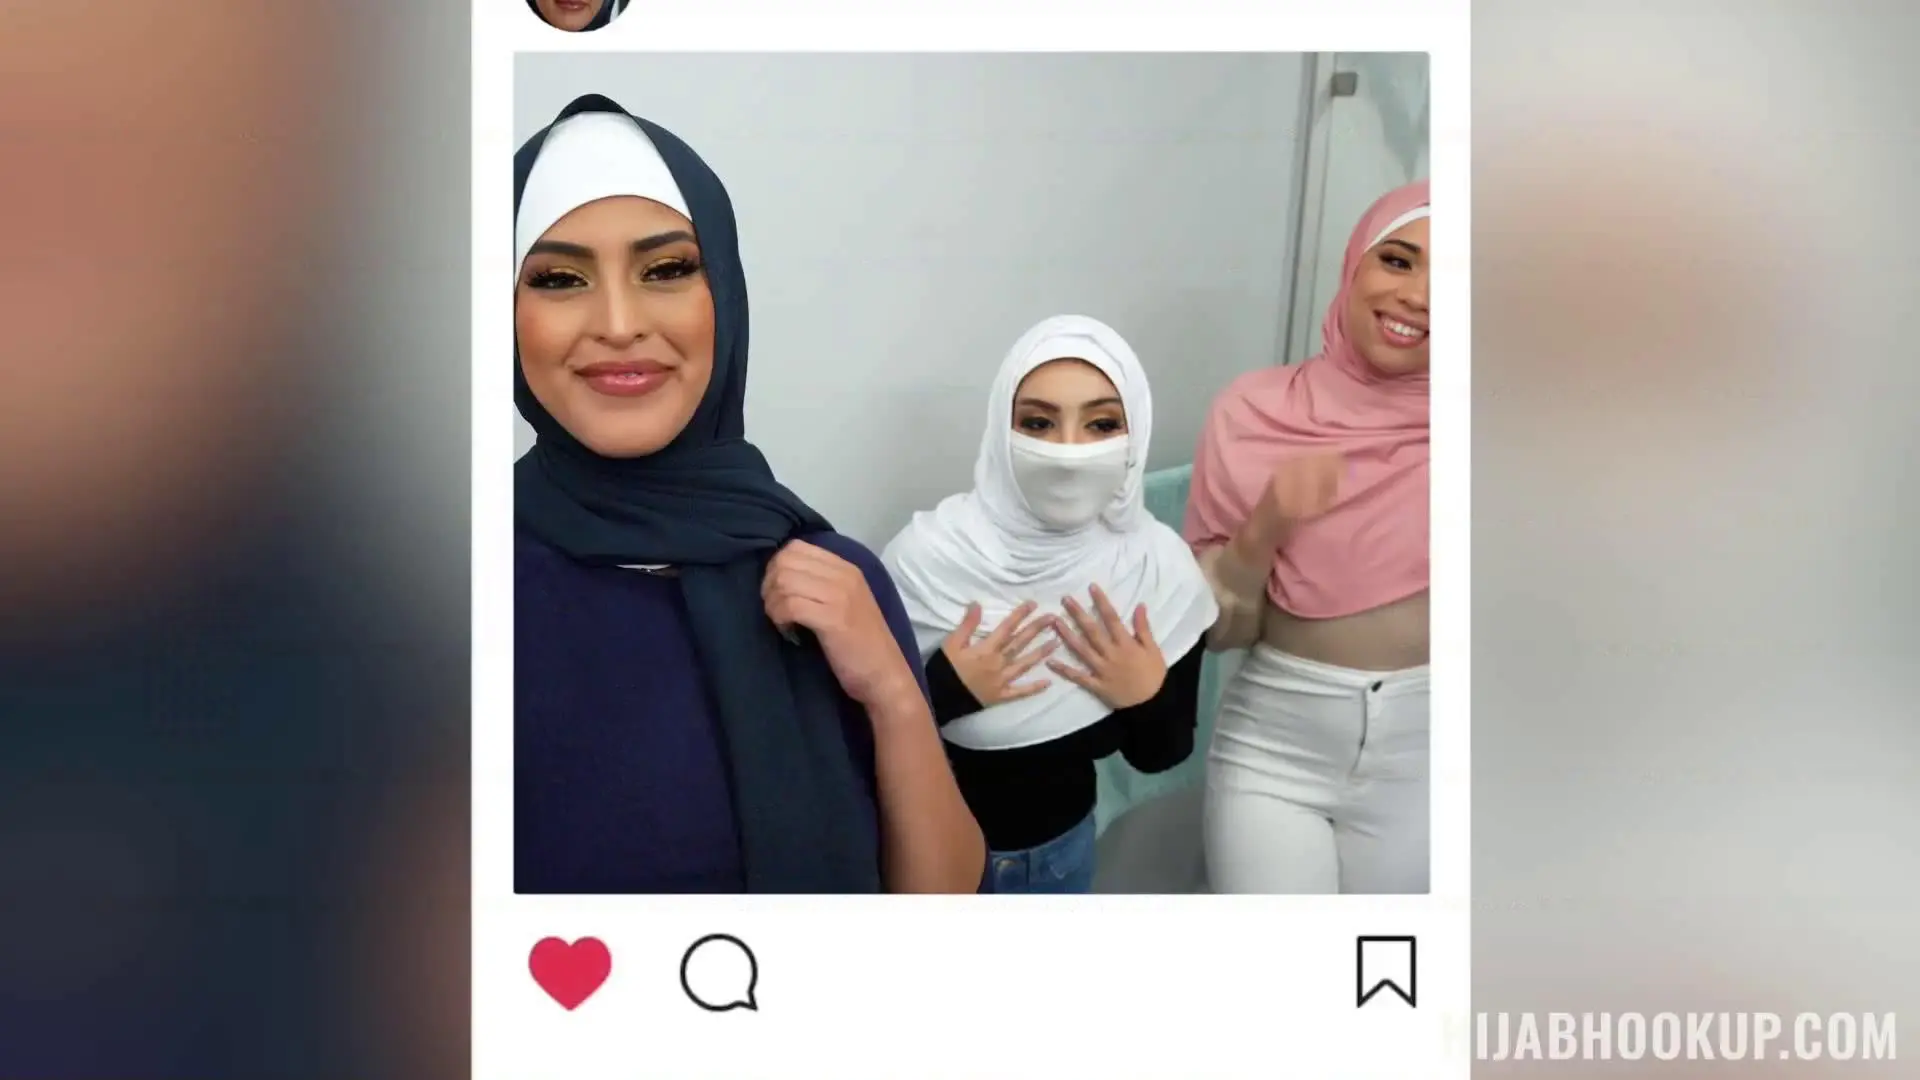 Hijab girlfriend coming to america image